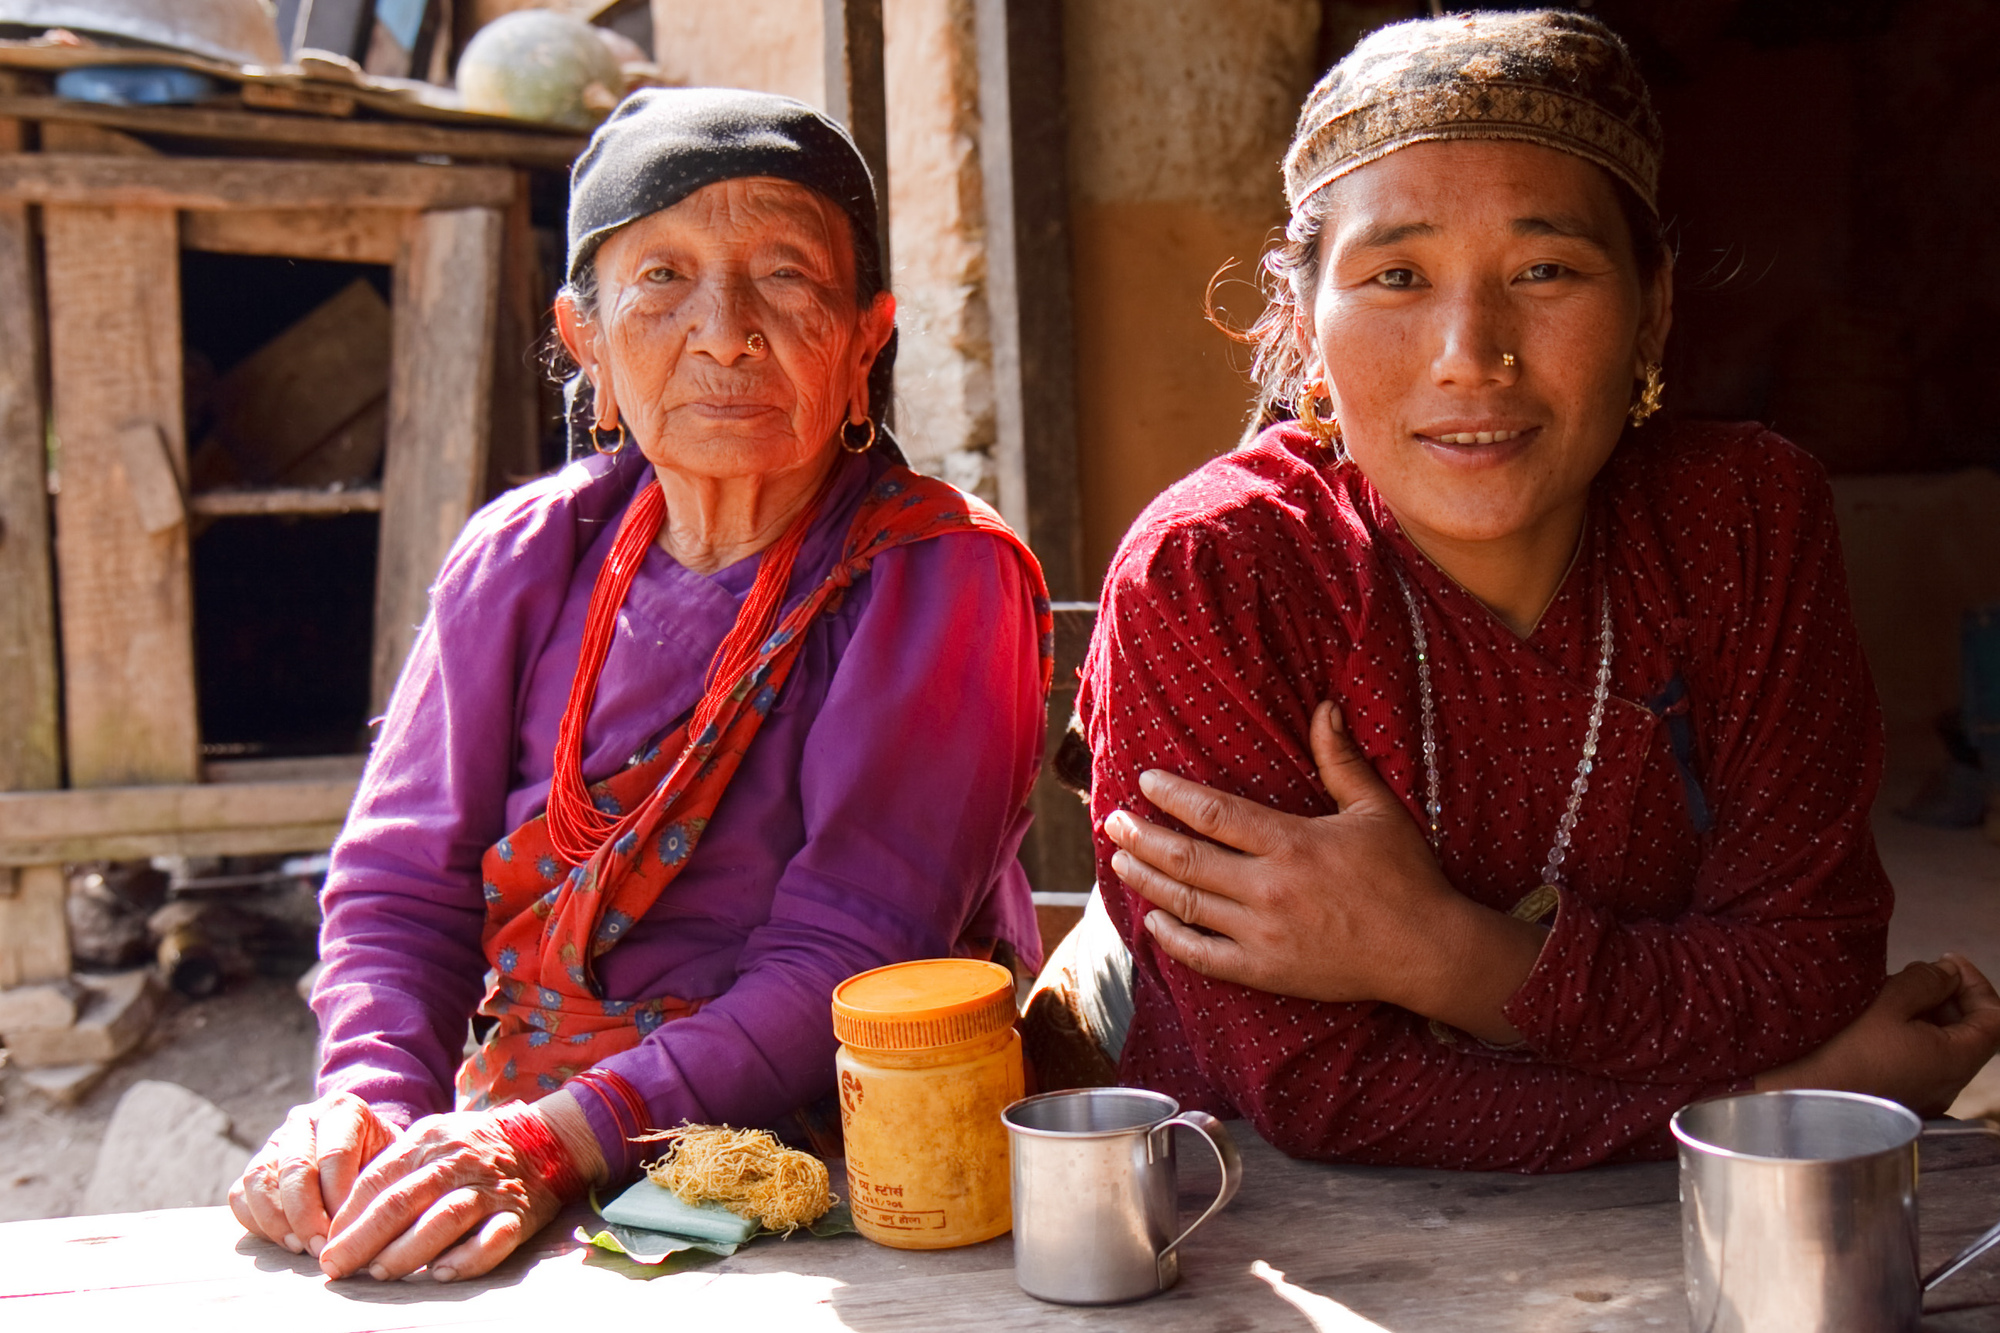 Villagers in Manaslu, Nepal - By Mountain People